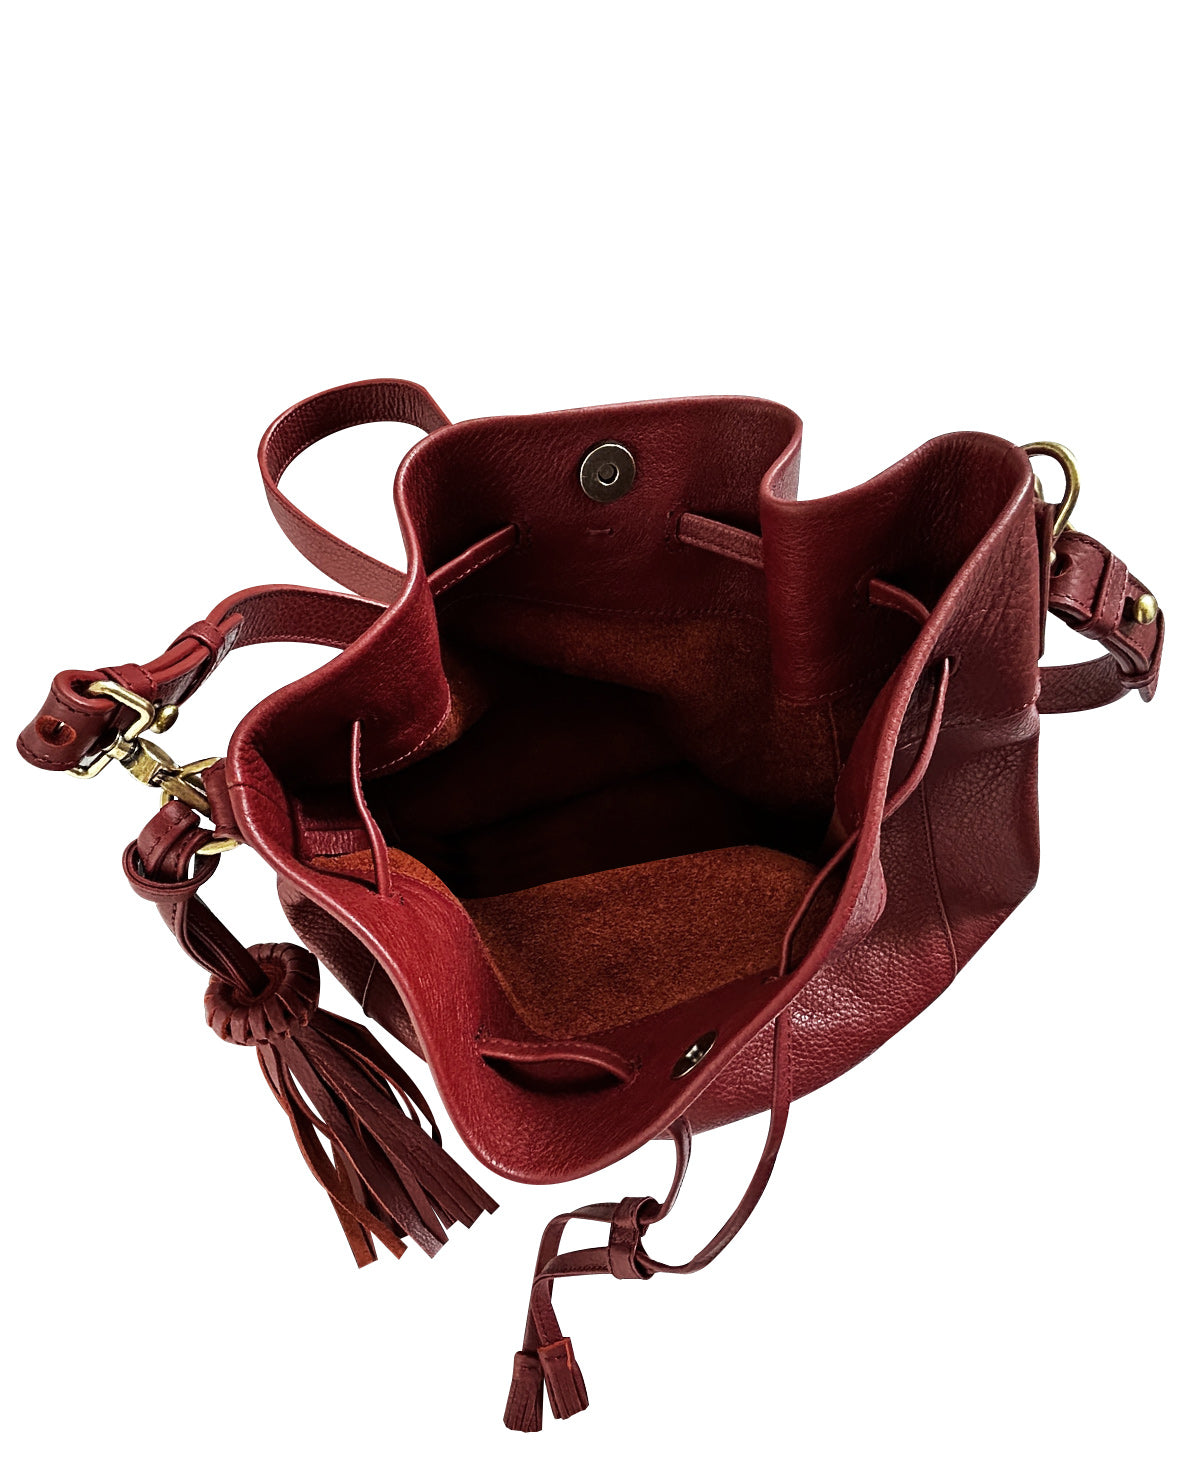 Bucket Bag Joce Cognac Leather Bag